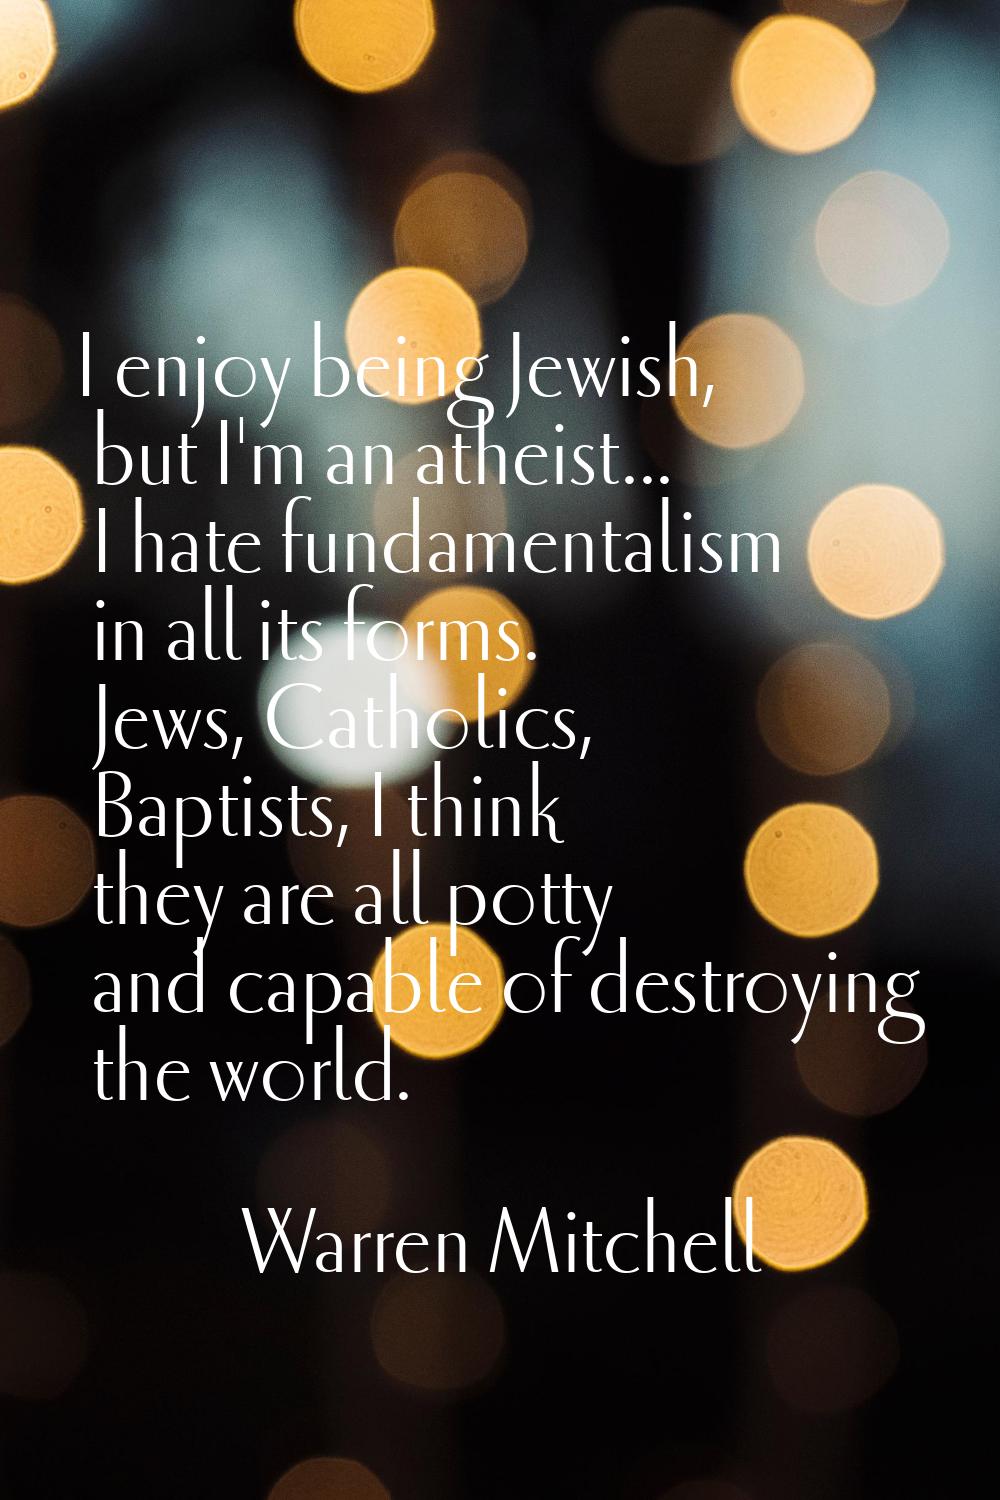 I enjoy being Jewish, but I'm an atheist... I hate fundamentalism in all its forms. Jews, Catholics